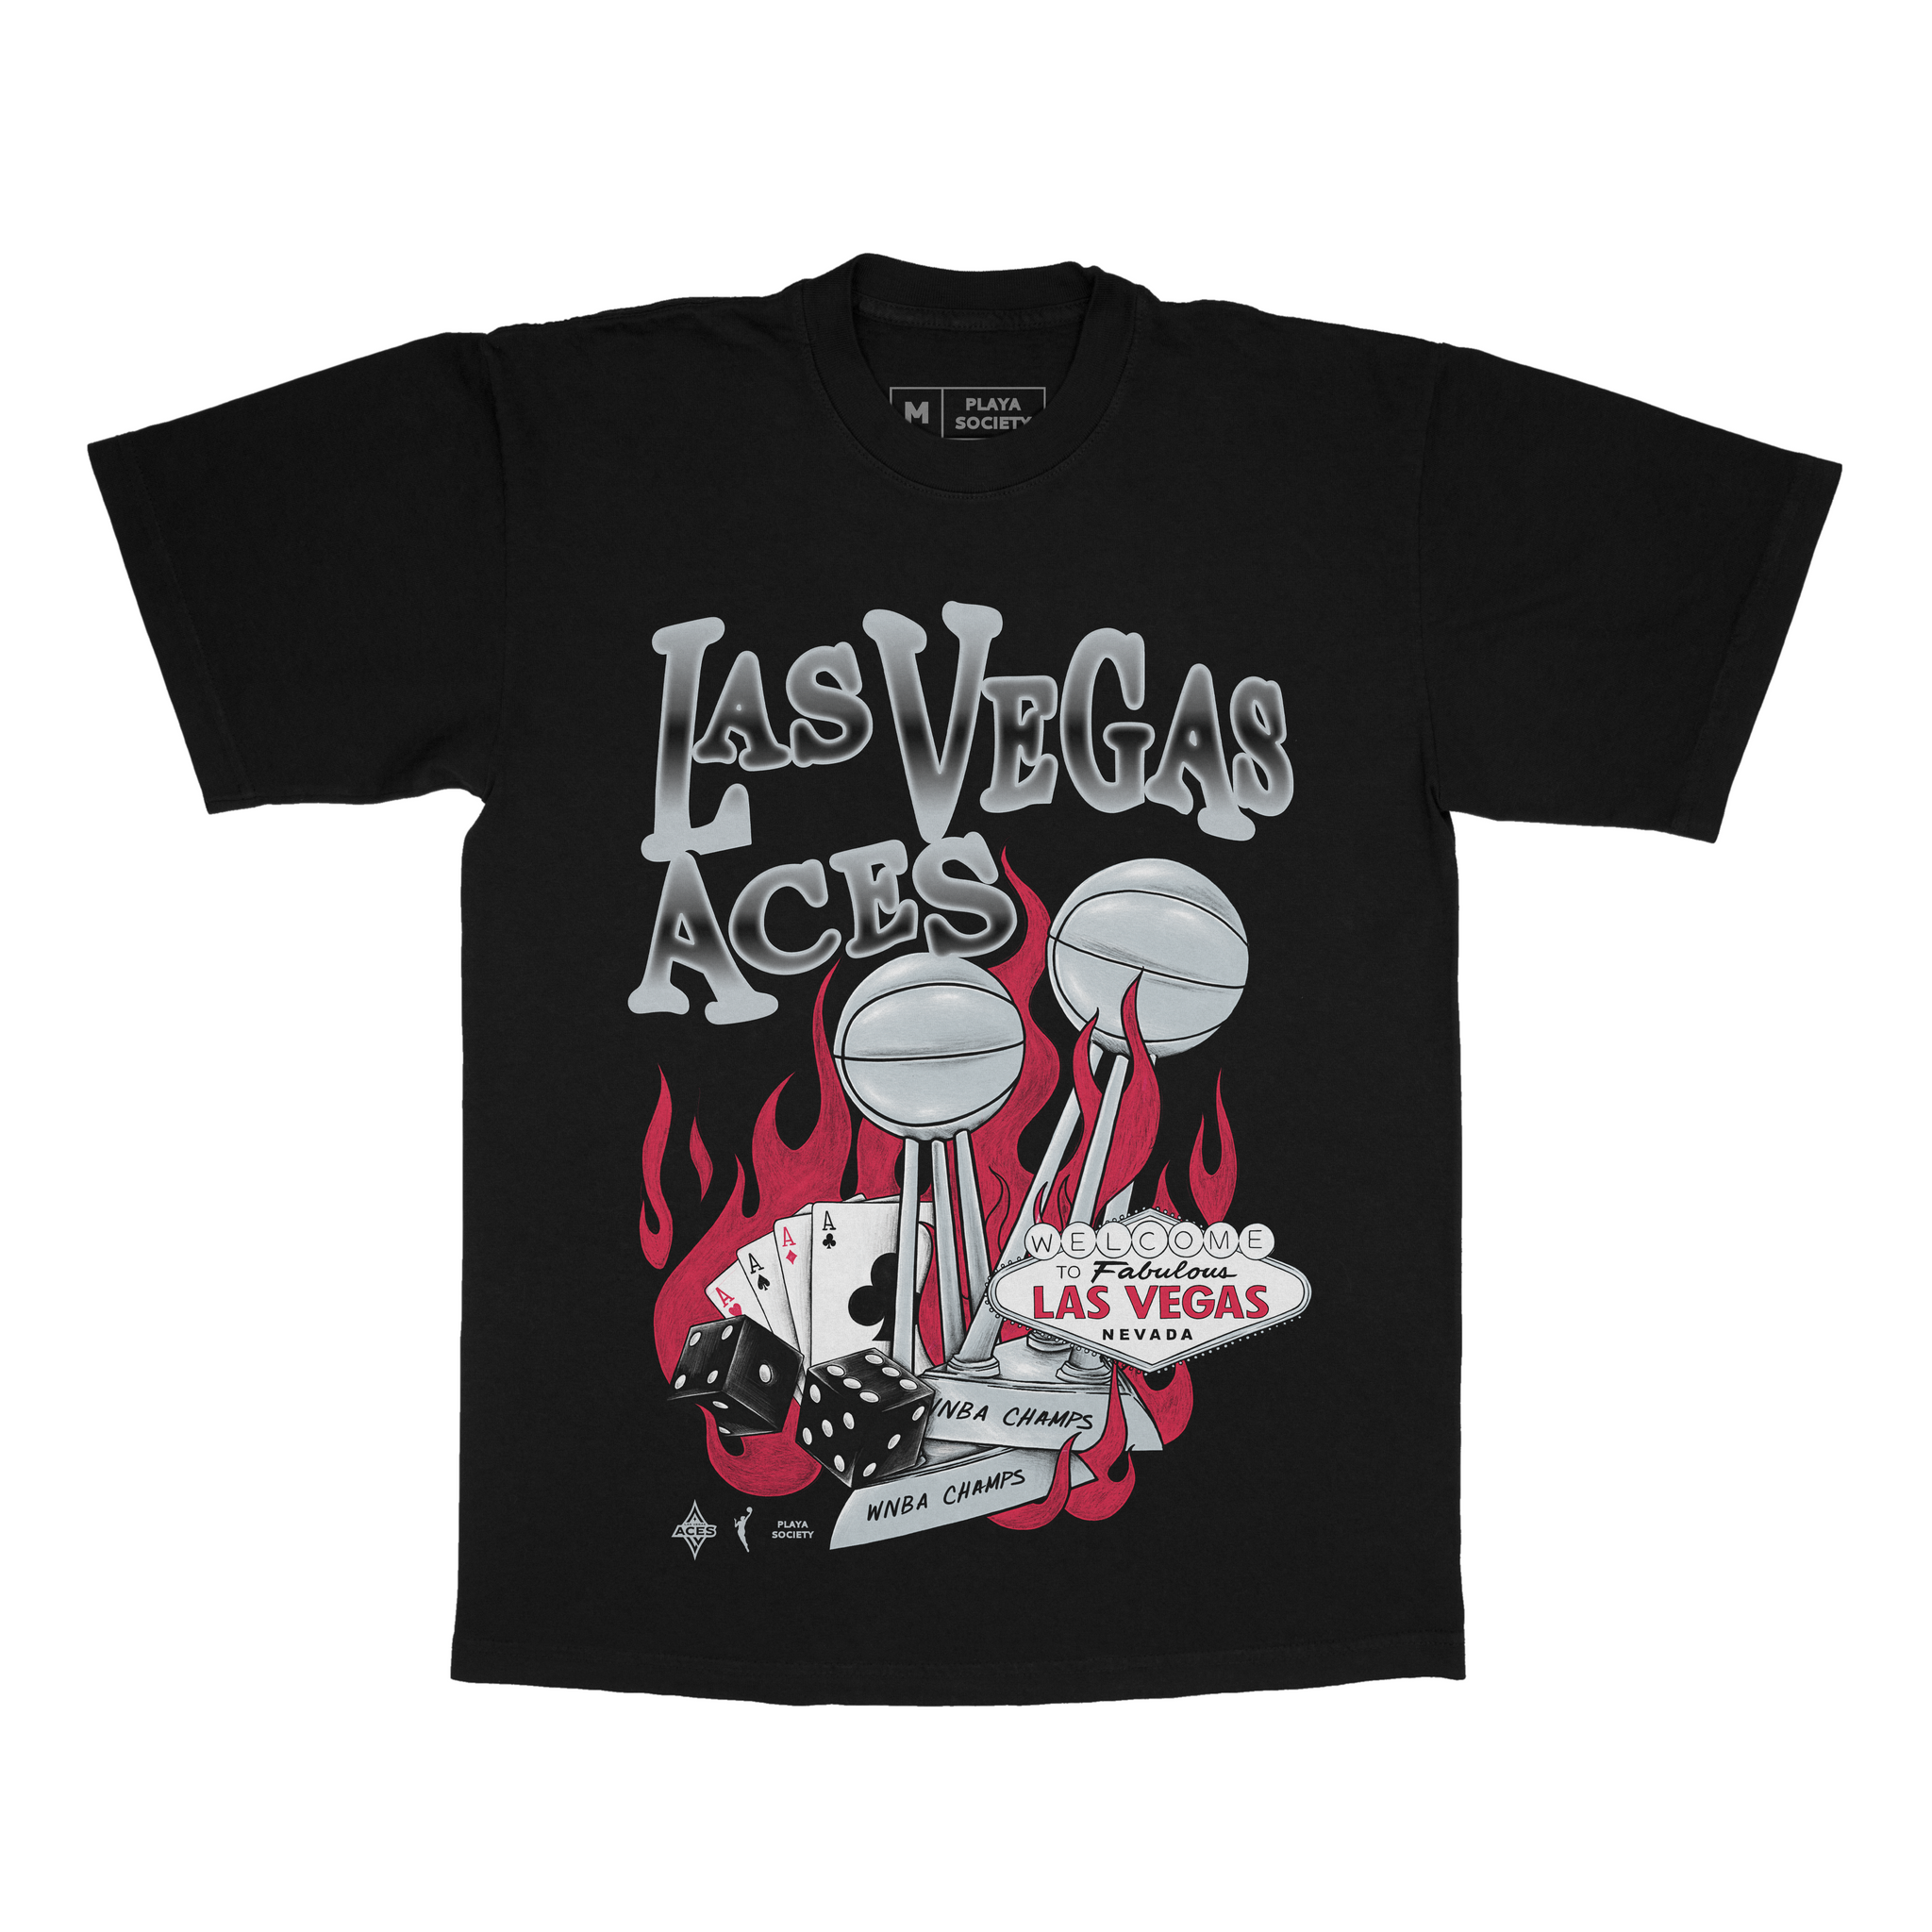 Las Vegas Aces "Twice as Hot" T-shirt